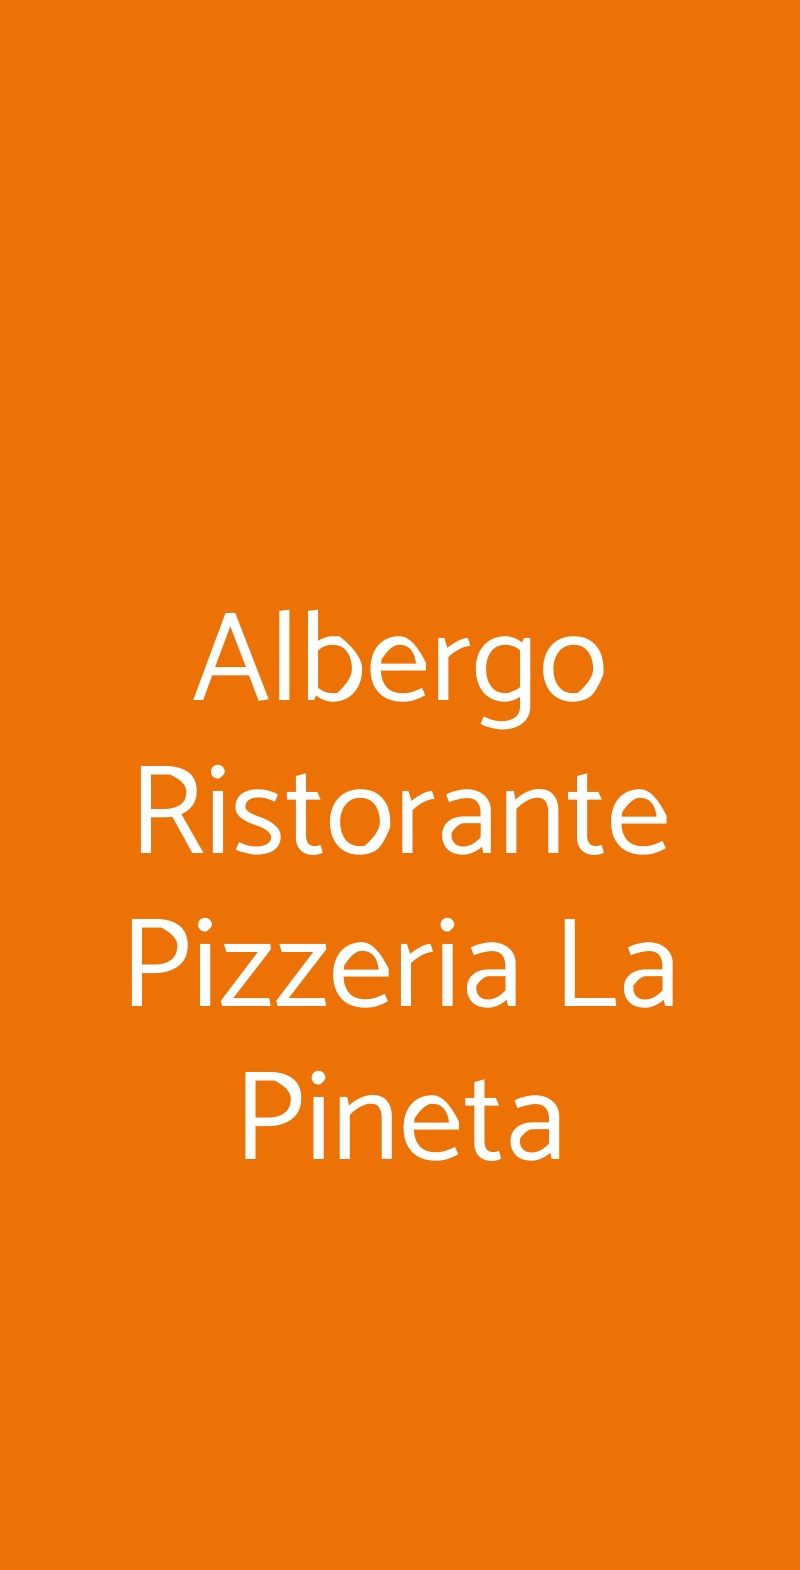 Albergo Ristorante Pizzeria La Pineta Cingoli menù 1 pagina